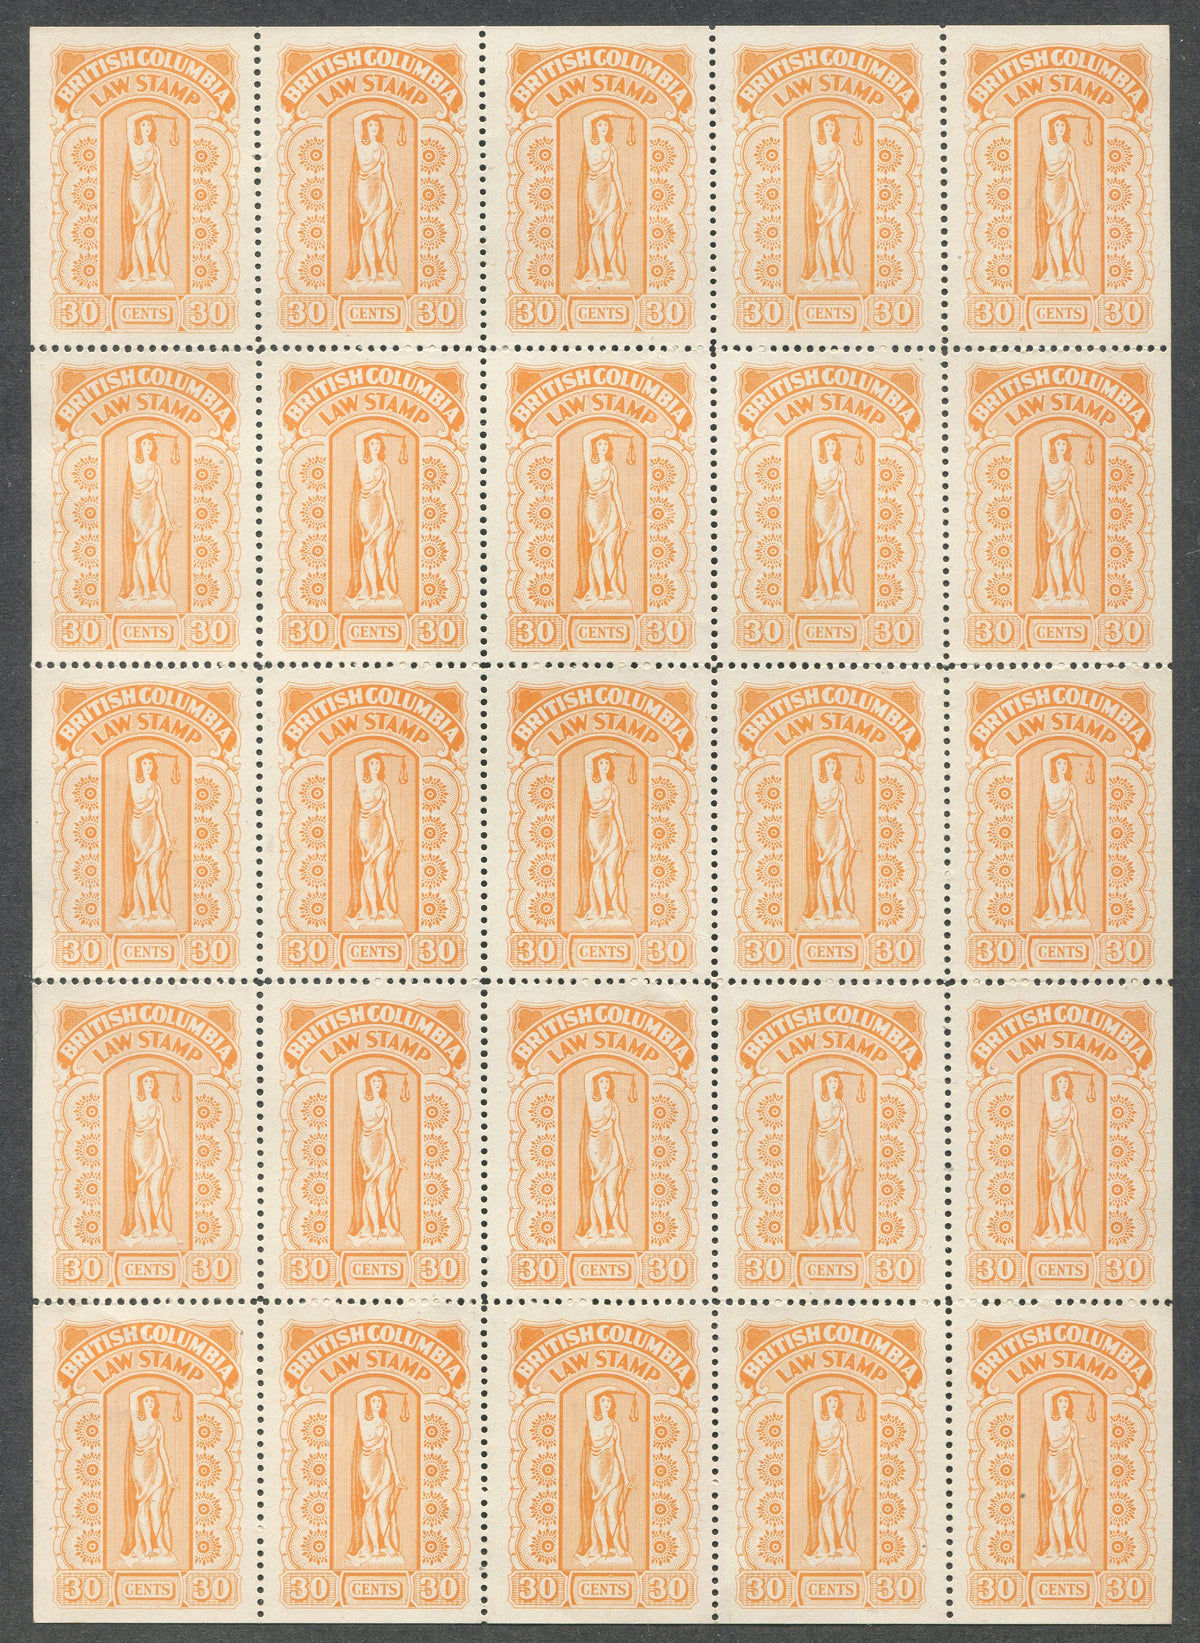 0038BC2010 - BCL38 - Mint Sheet of 25